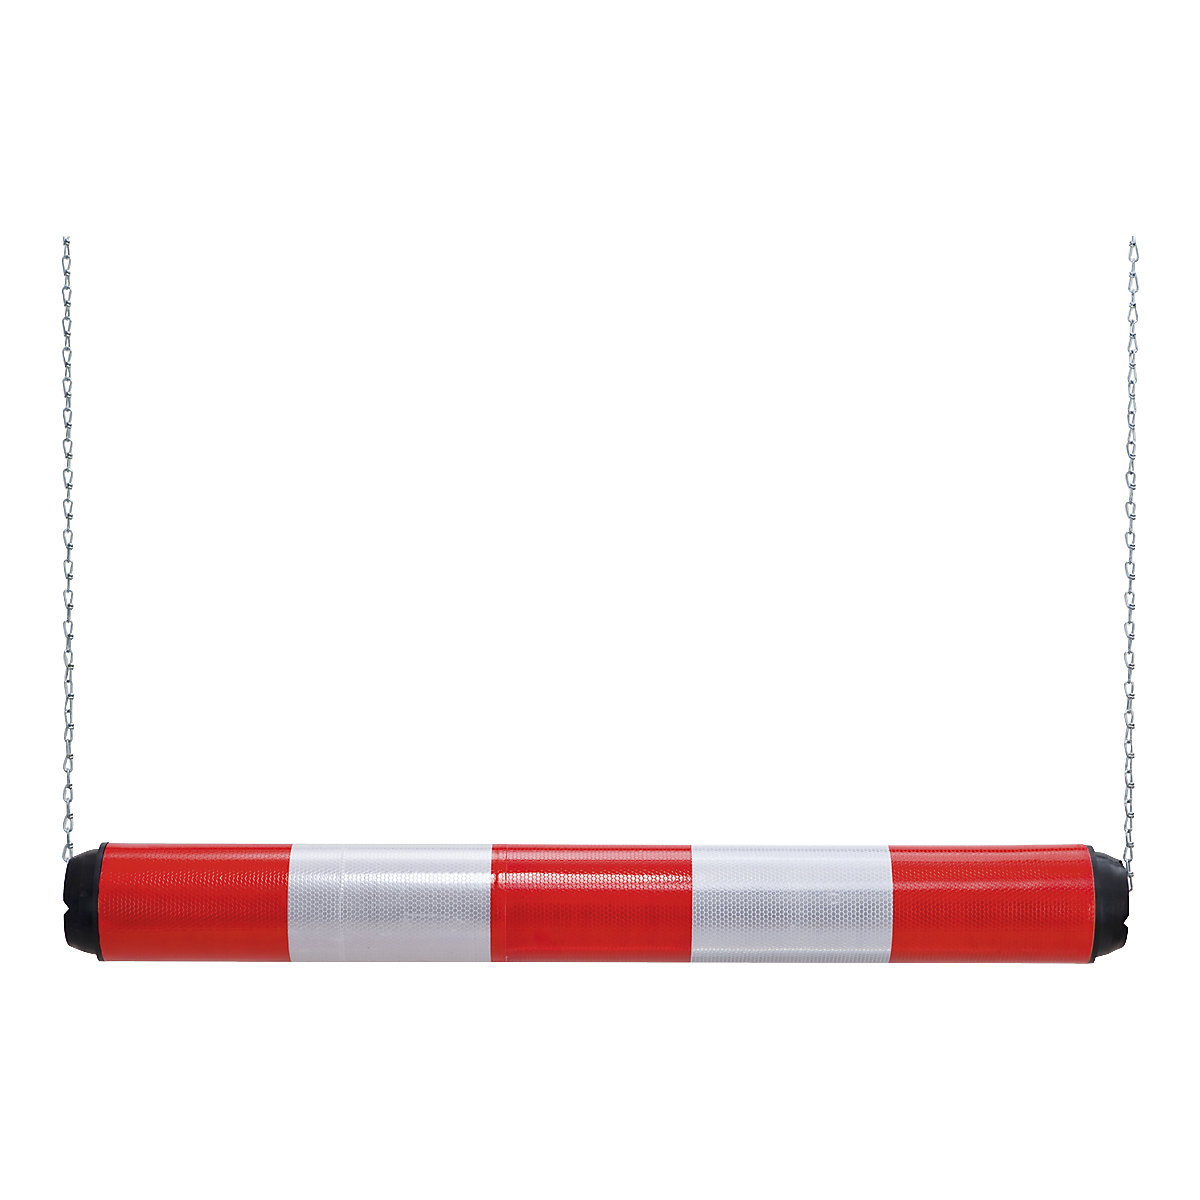 Barra di plastica limitatrice altezza, lunghezza 950 mm, rosso-bianco rifrangente, a partire da 4 pz.-2